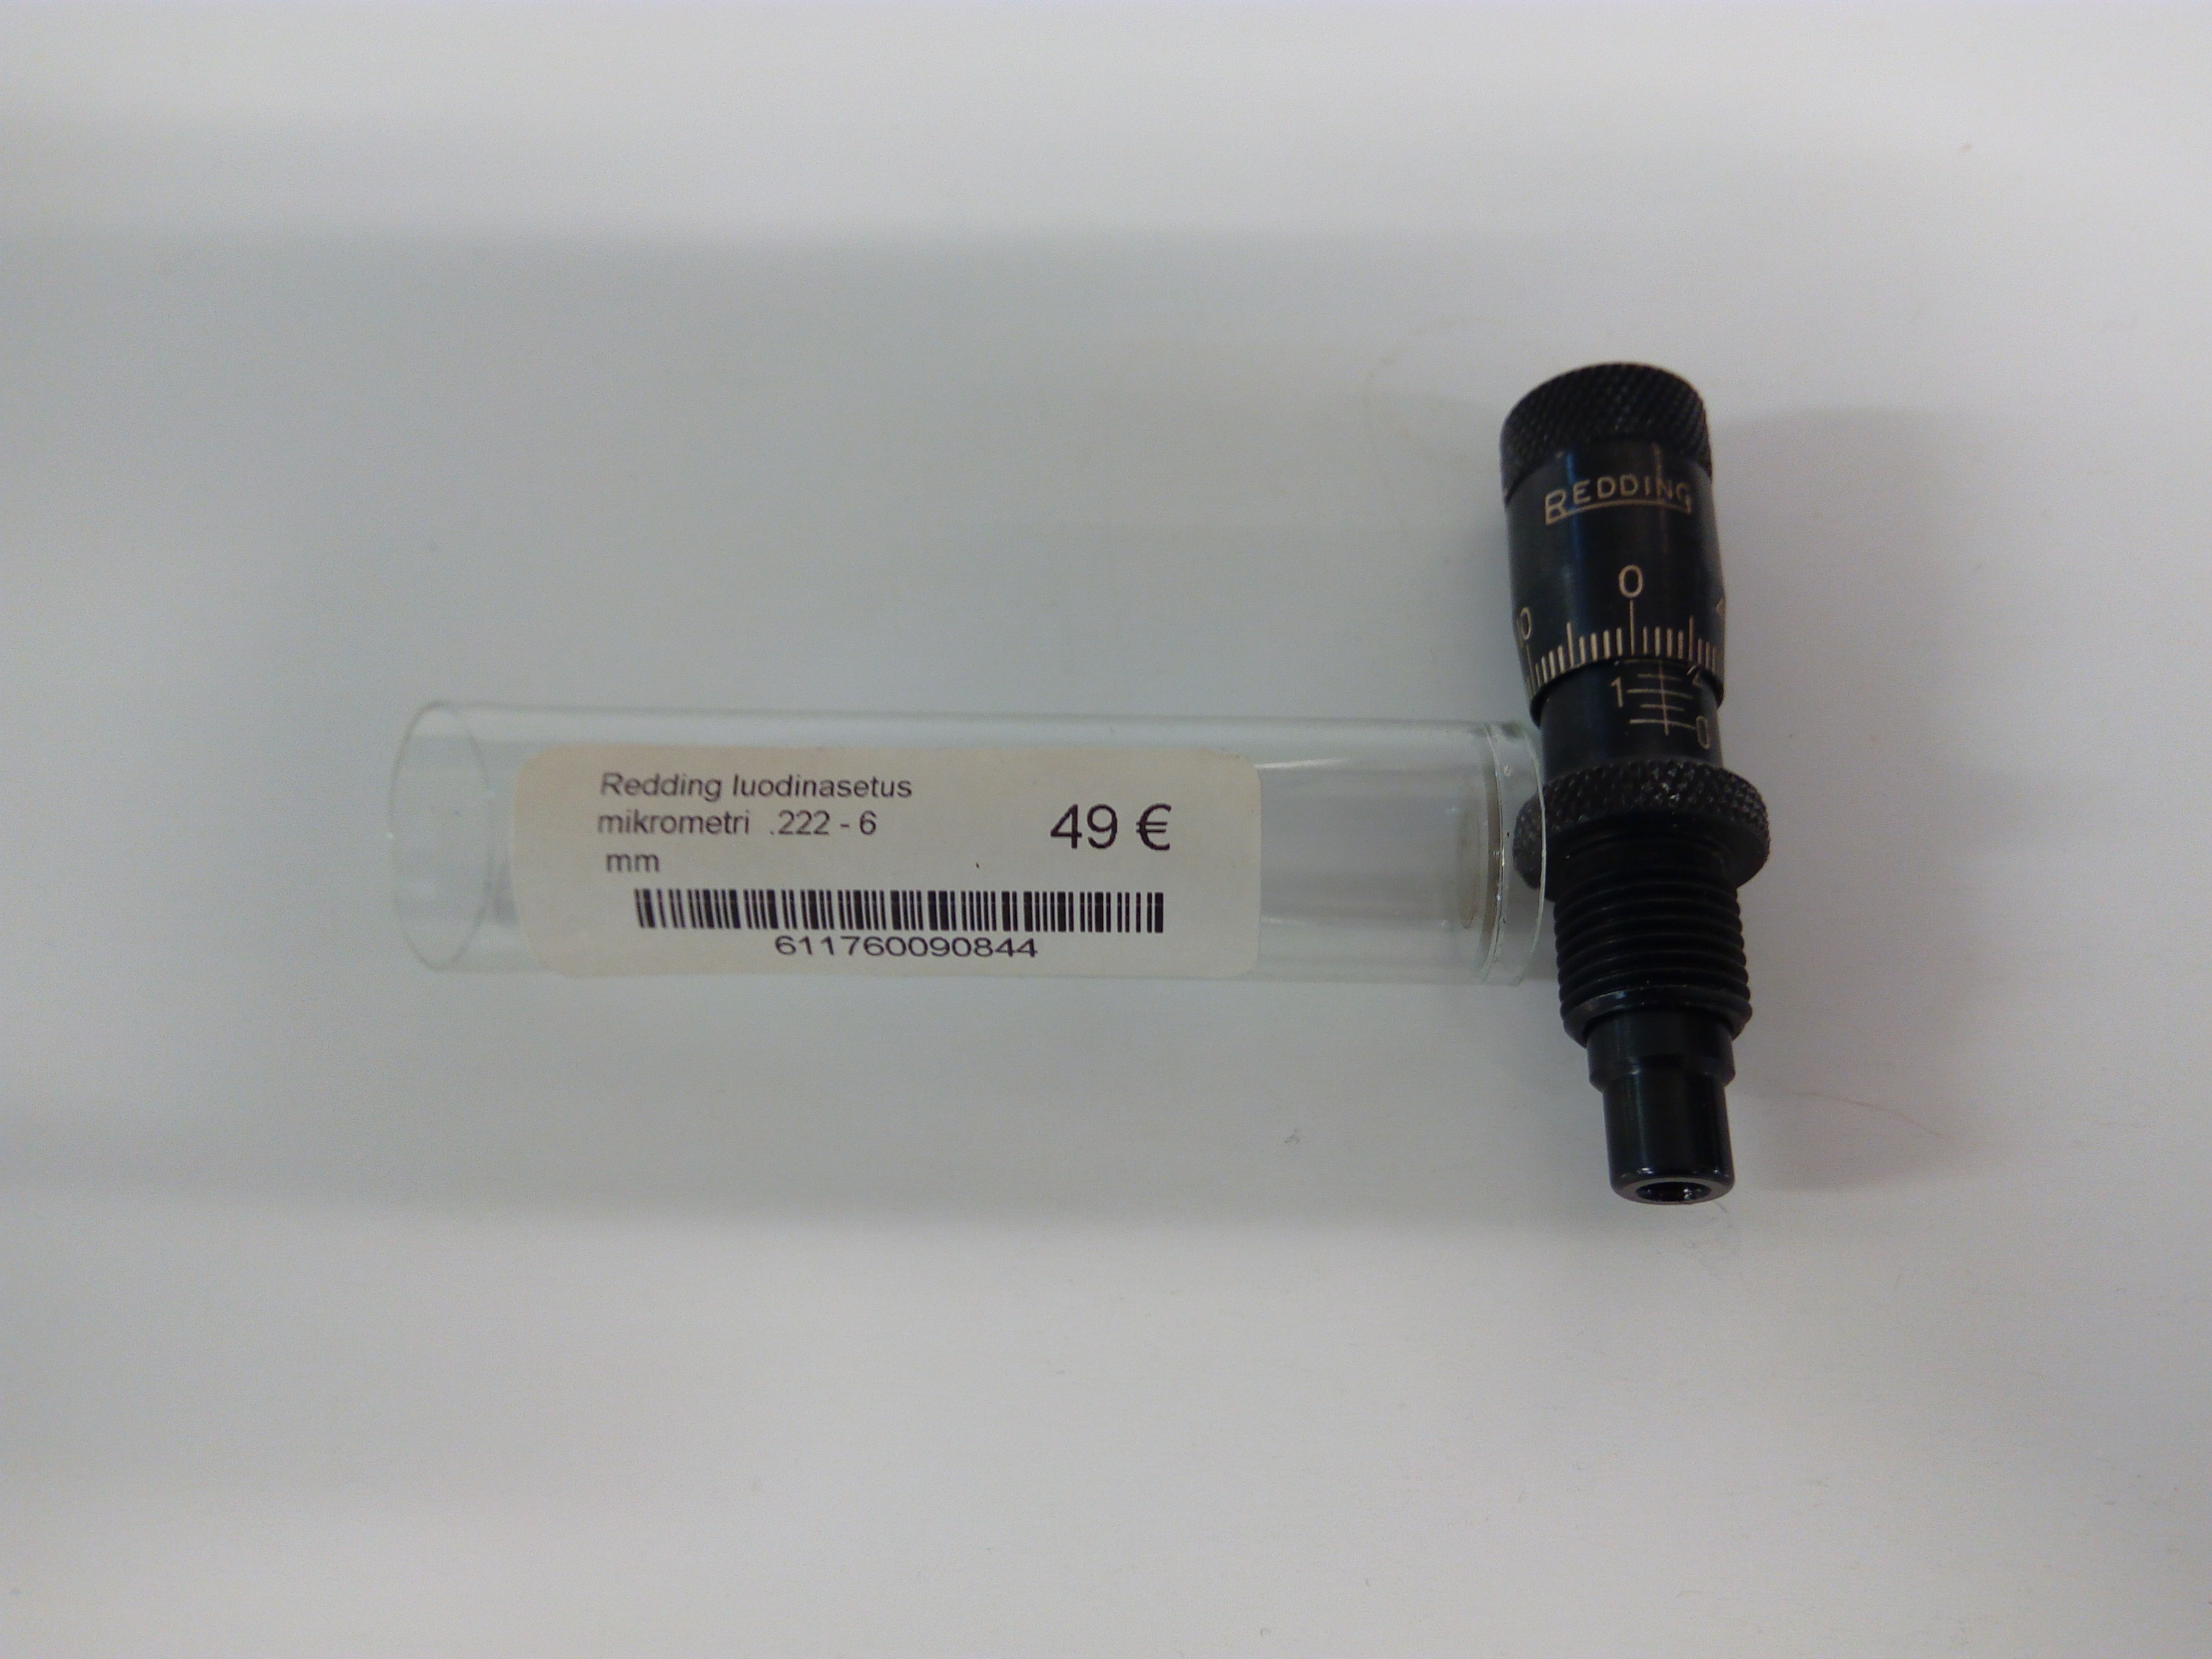 Redding luodinasetusmikrometri  .222 - 6 mm                                                                   